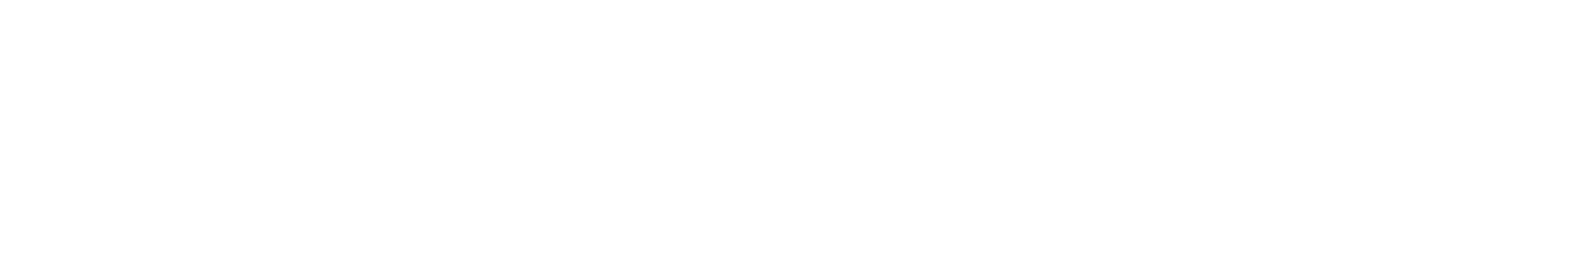 Aurora Cannabis logo large for dark backgrounds (transparent PNG)